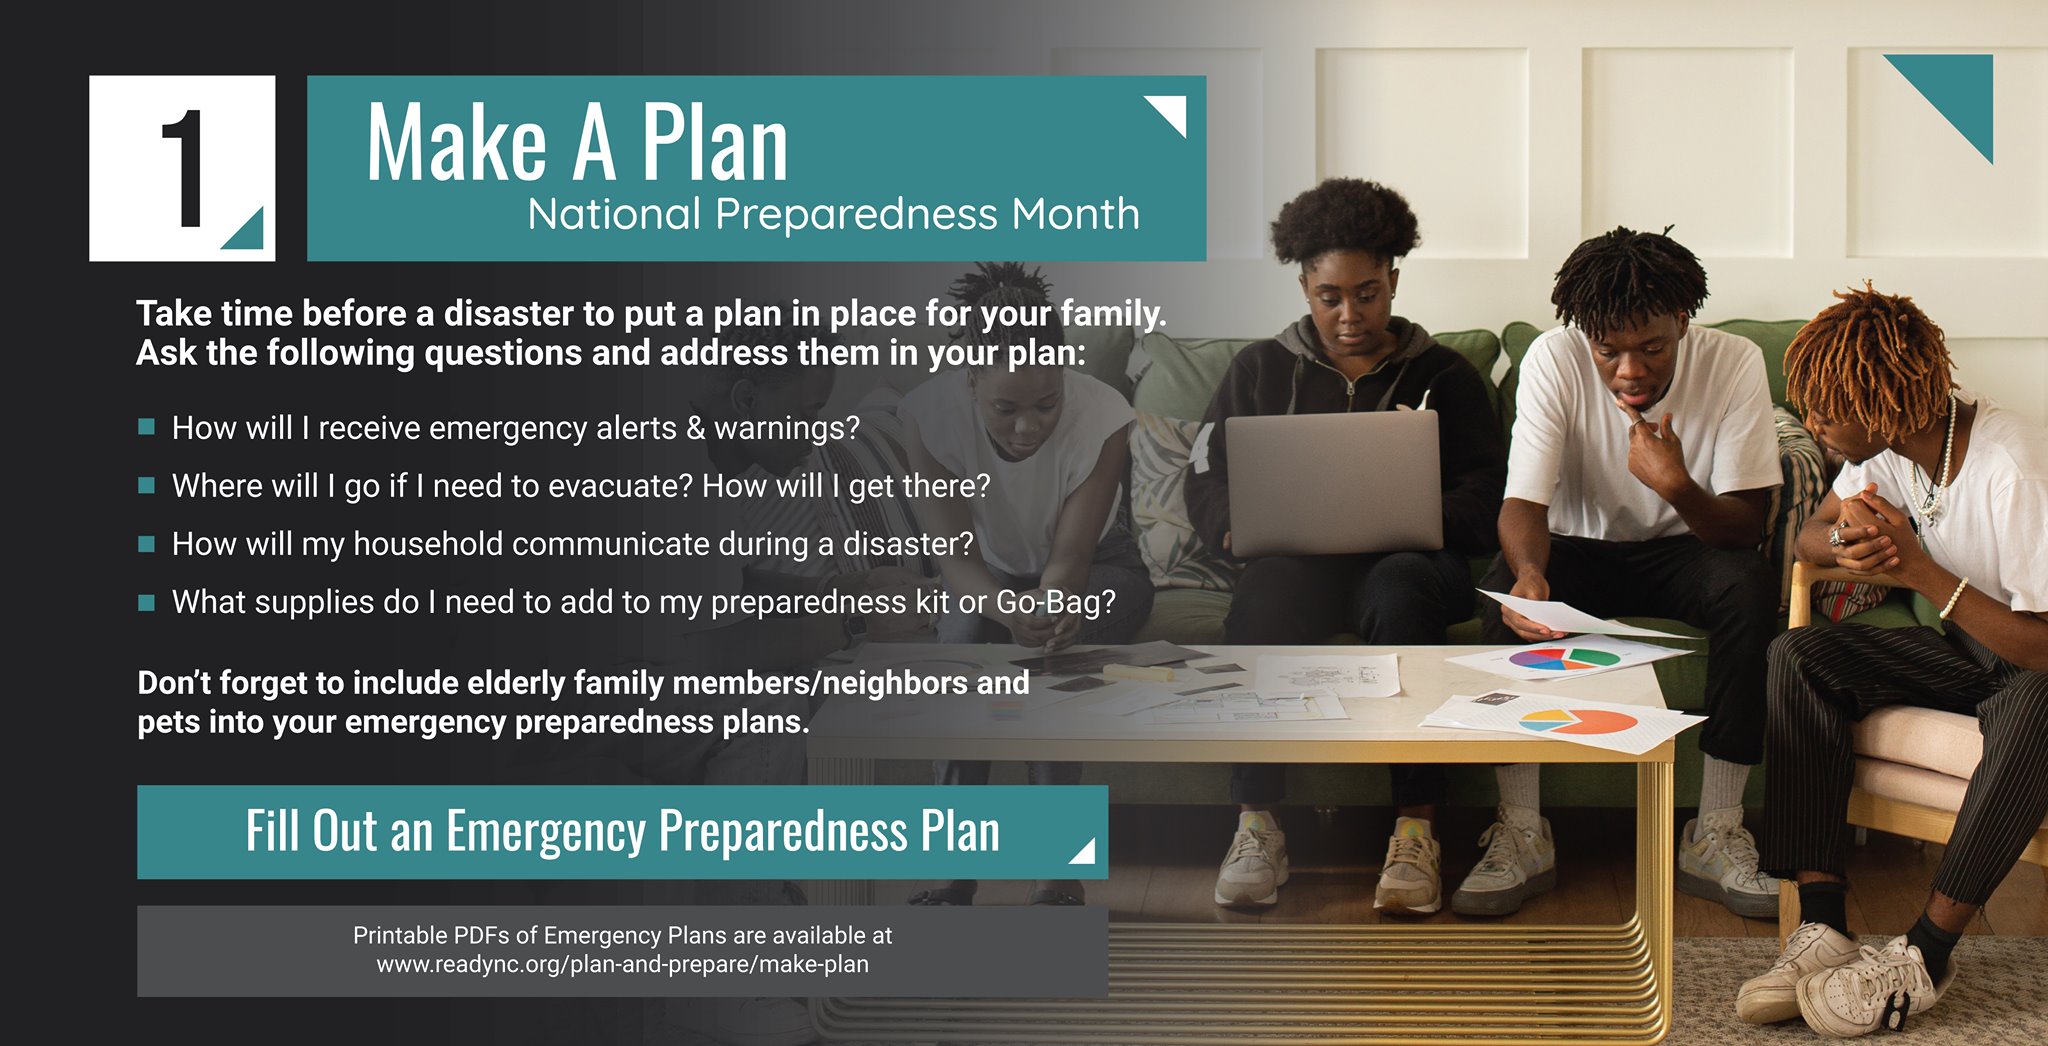 Make a plan brochure, national preparedness